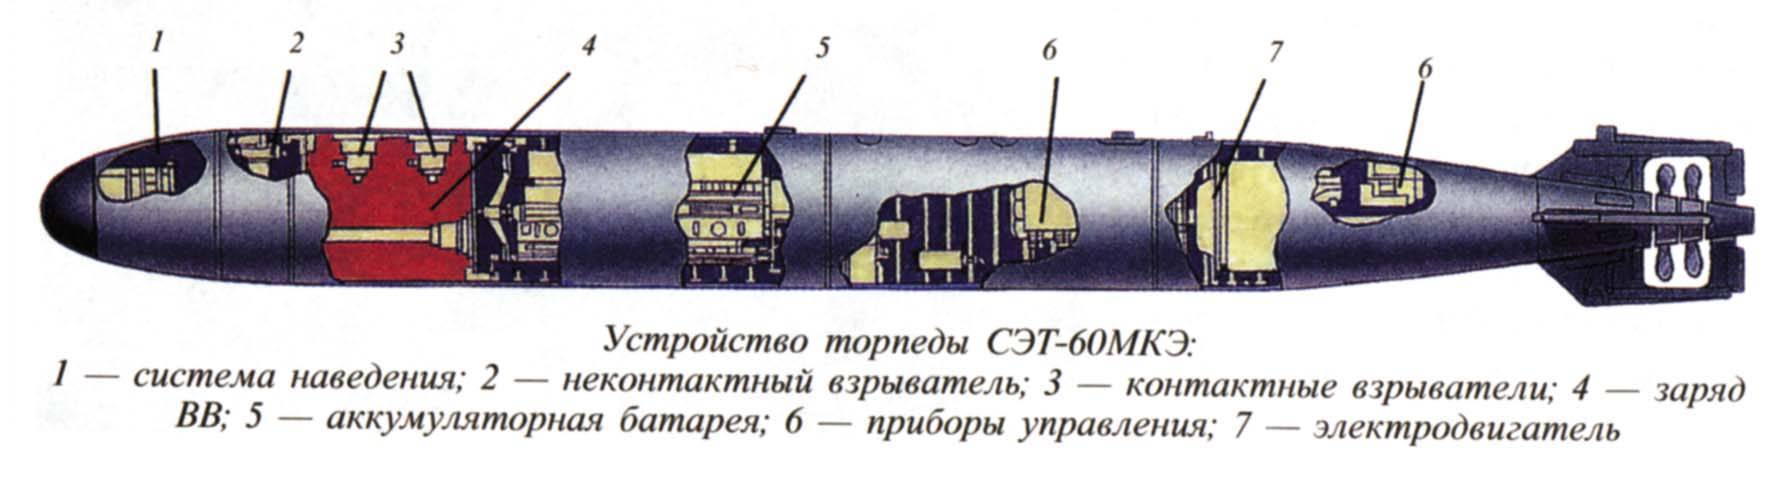 533-мм торпеда сэт-65